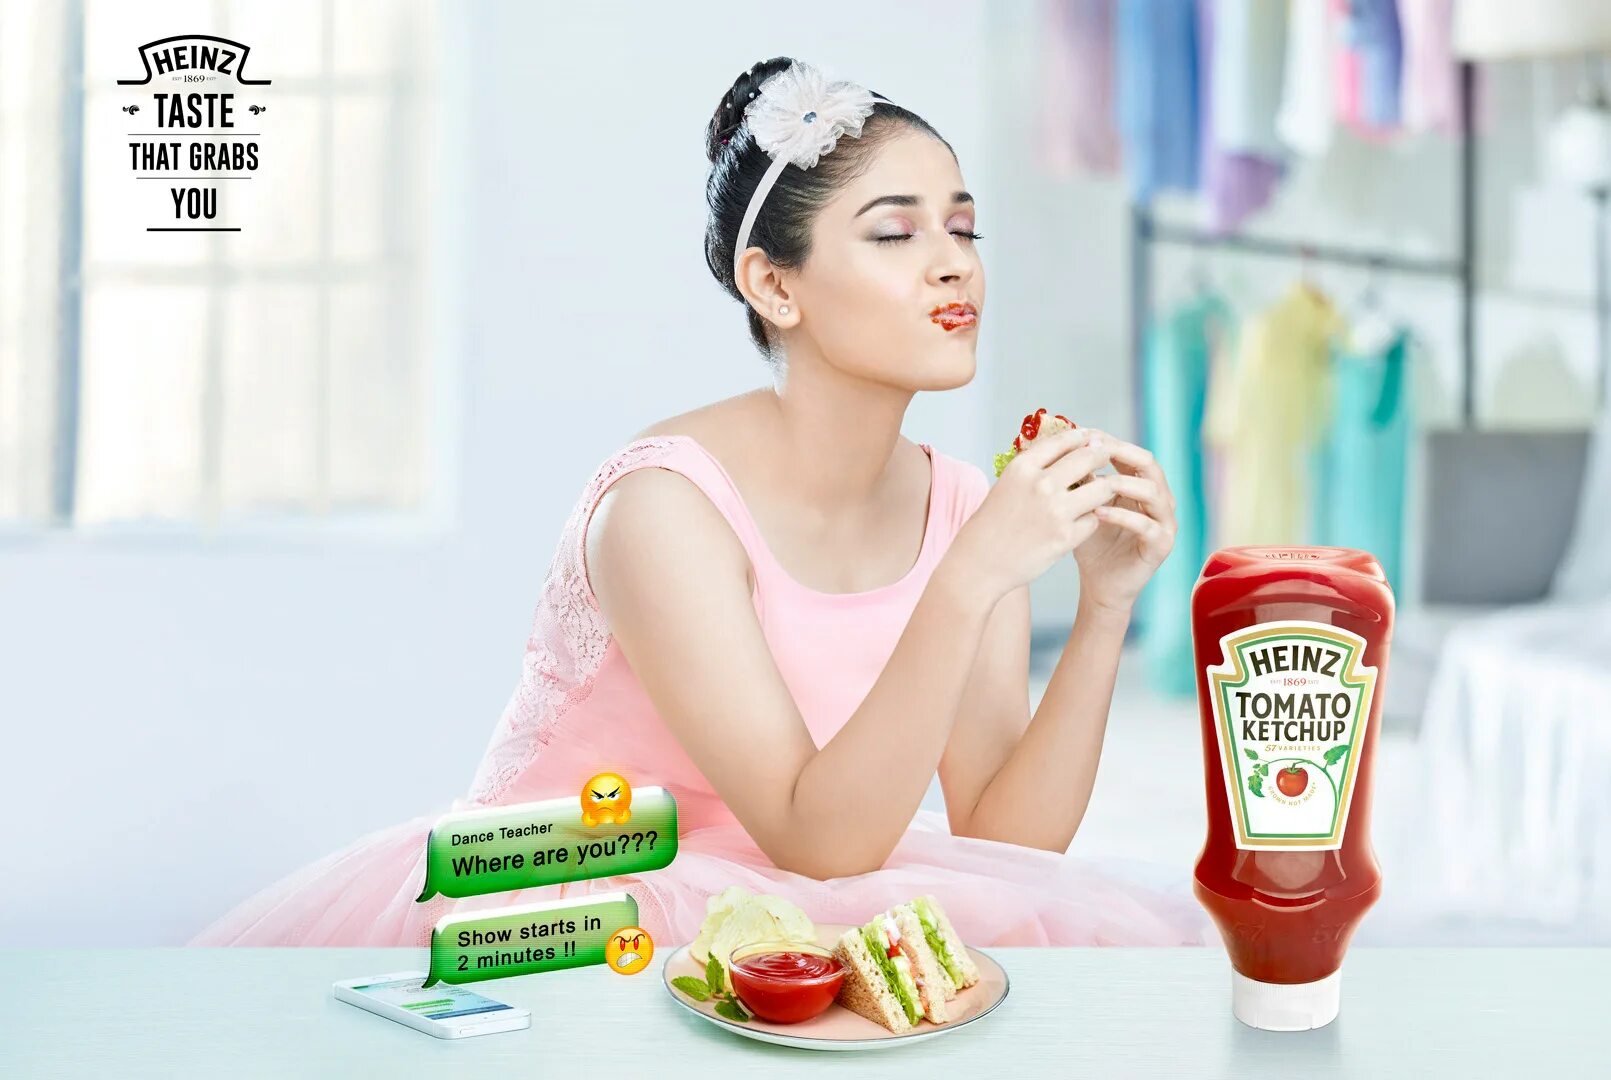 Реклама итальянское качество. Реклама Heinz. Реклама кетчупа Heinz. Heinz реклама 2021. Популярная реклама Хайнц.